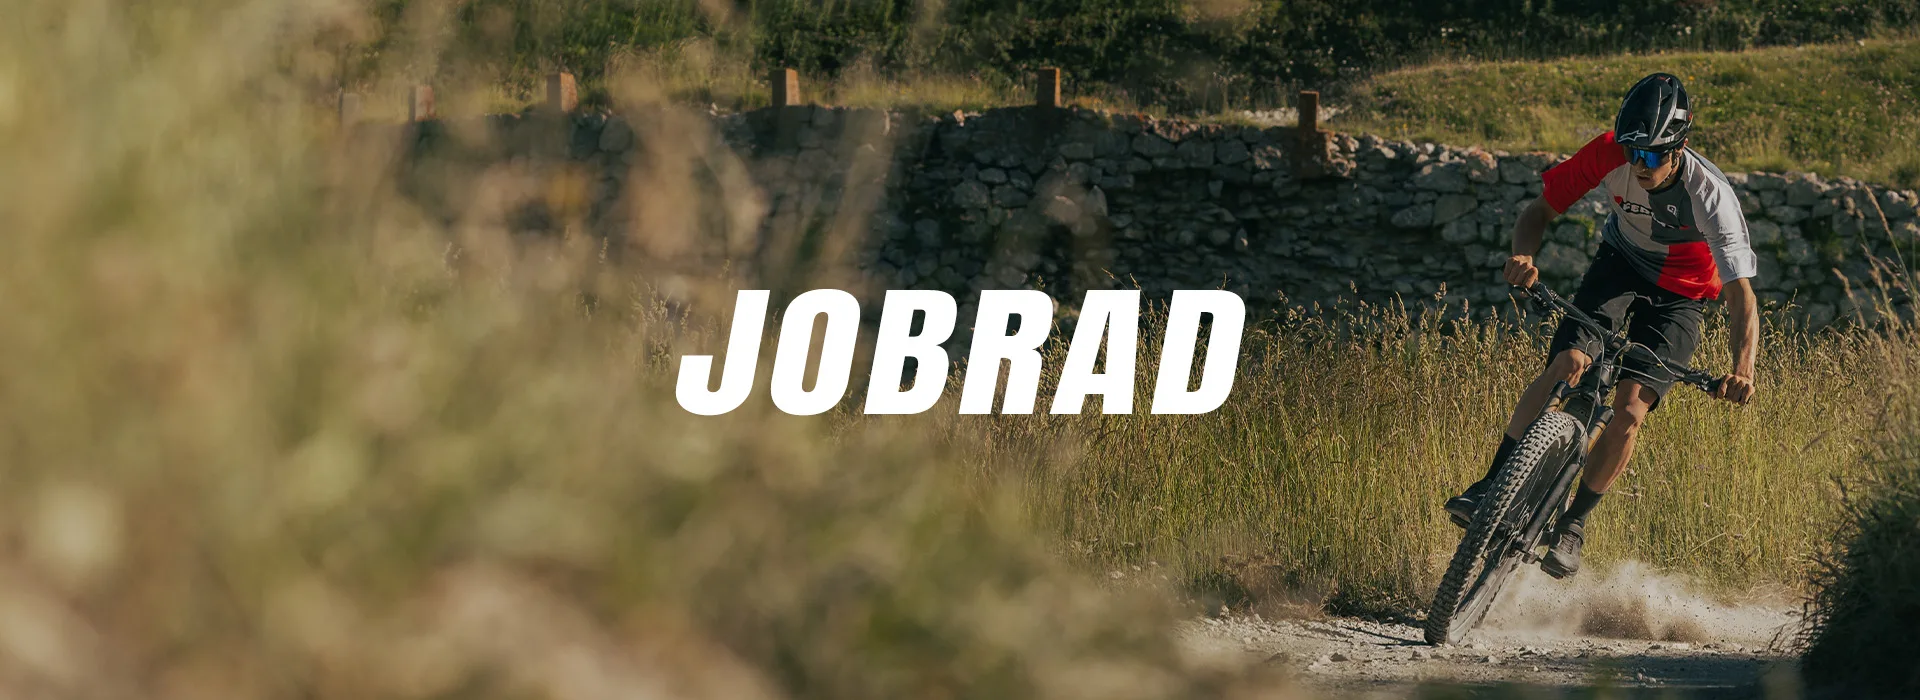 Thok news - JOBRAD